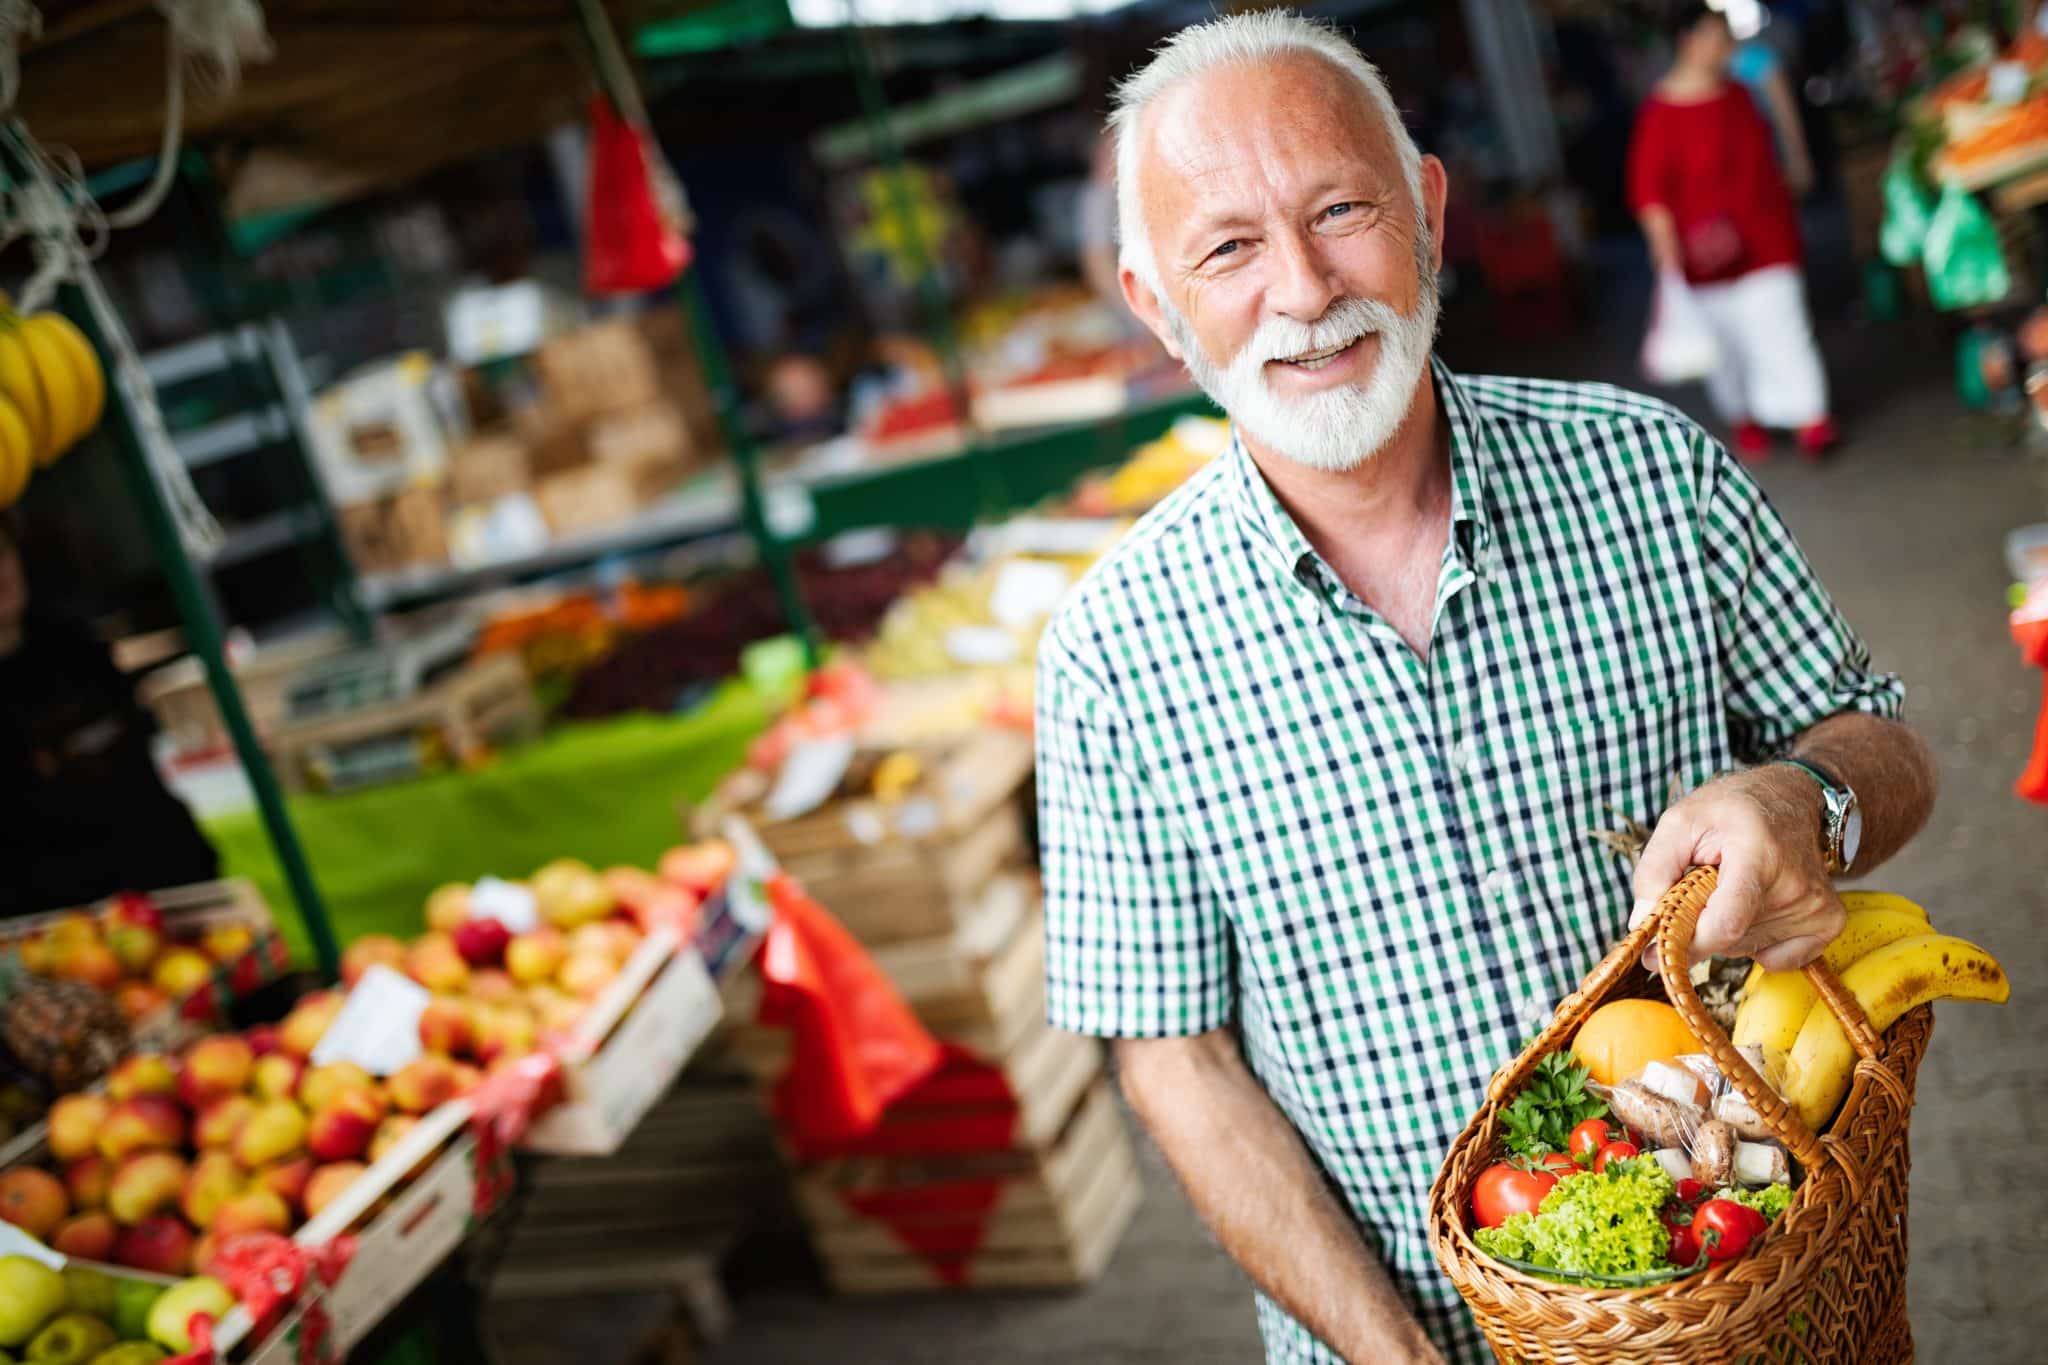 senior man smiling and holding basket of fresh produce while shopping at a market